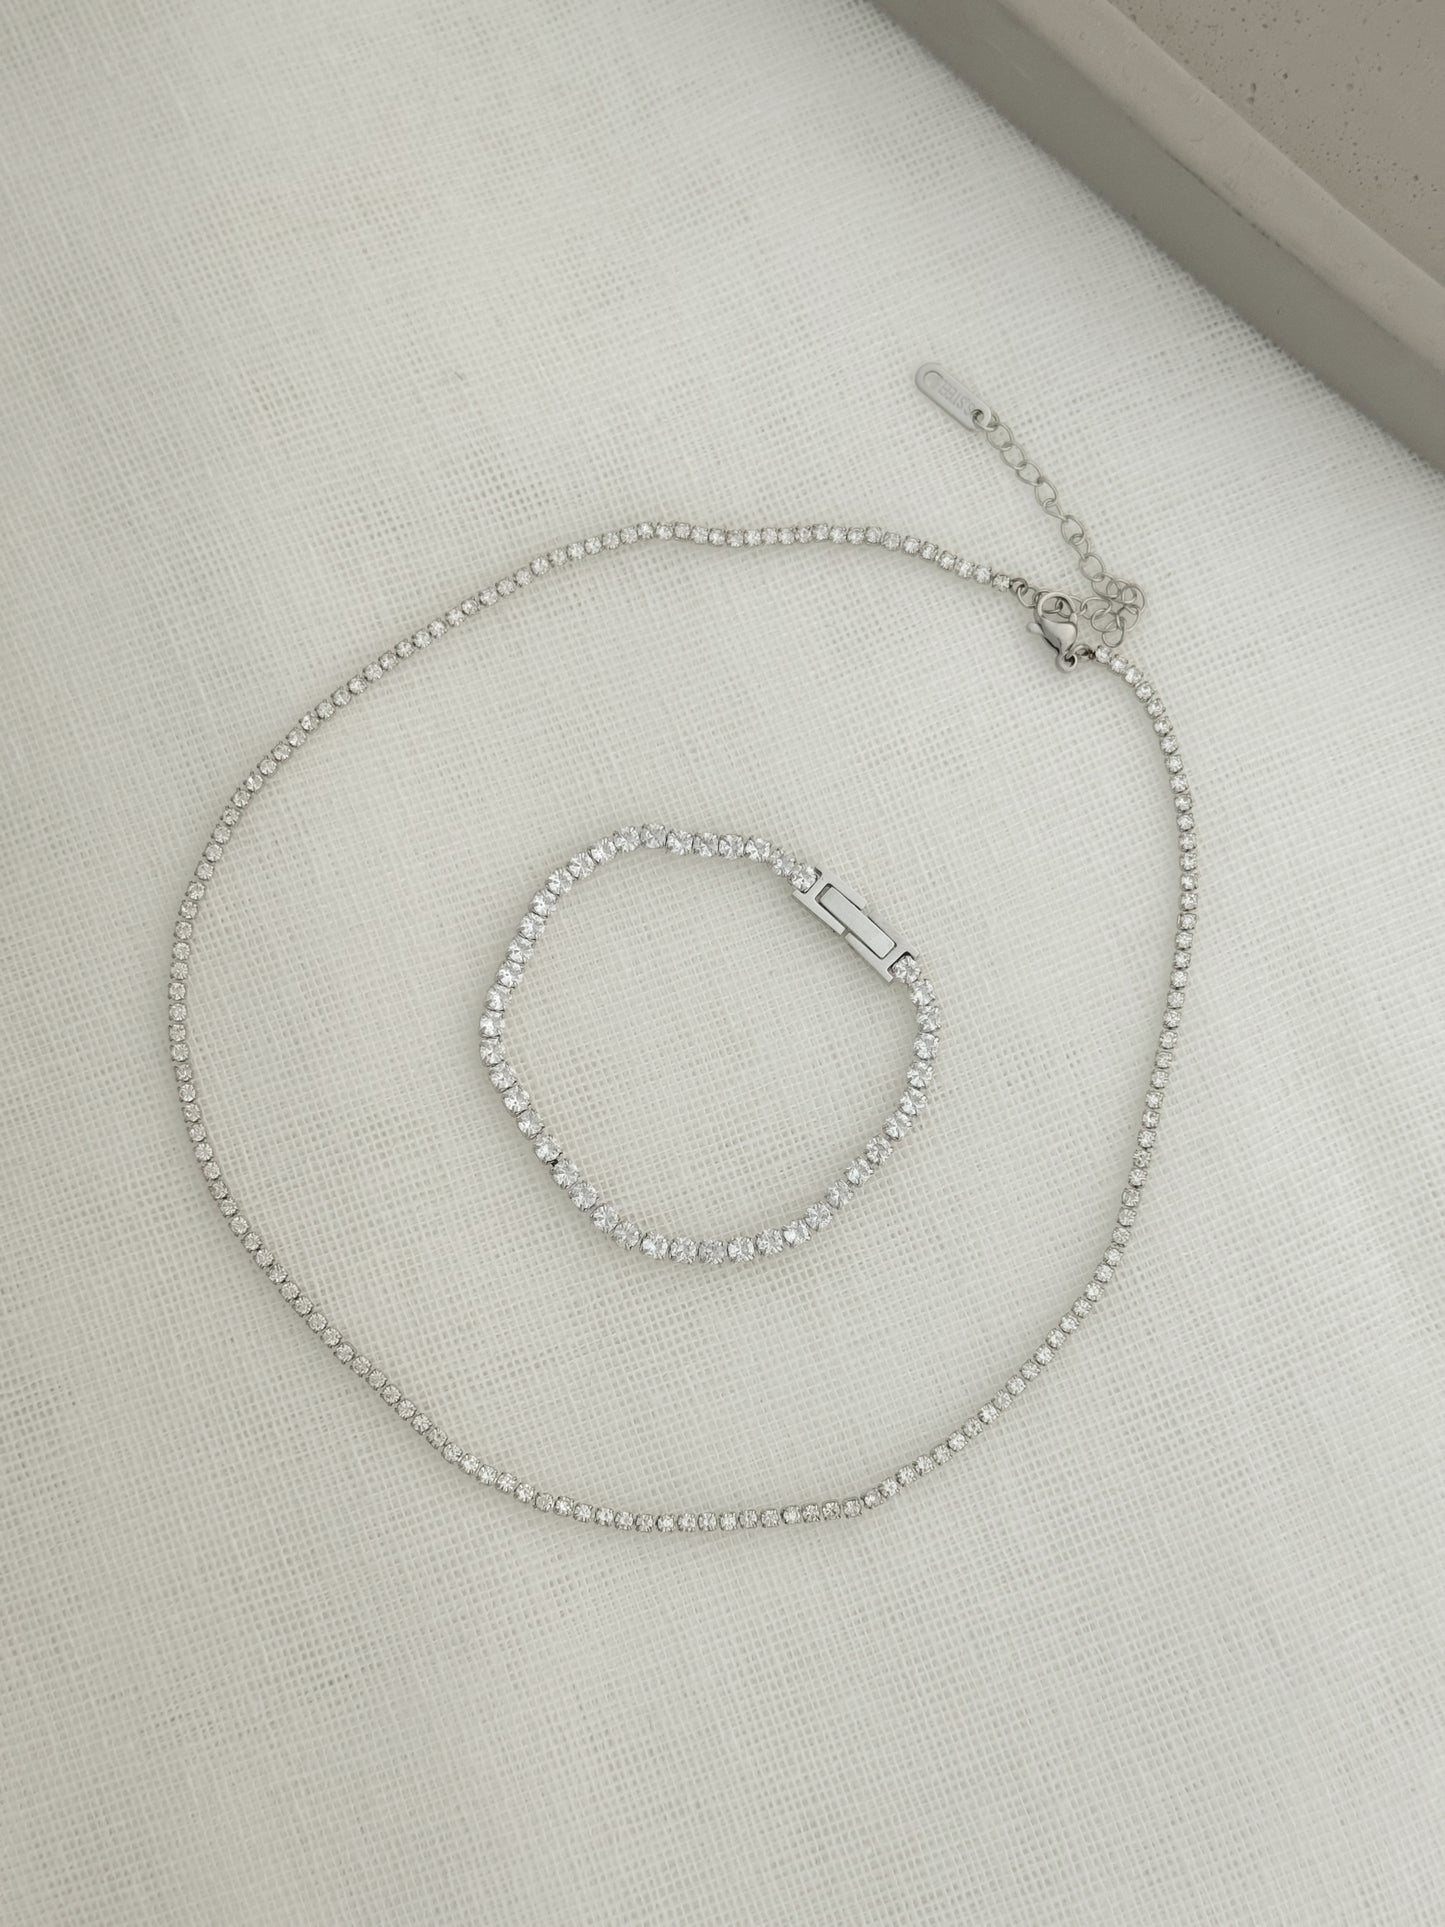 Fine Tennis necklace & bracelet